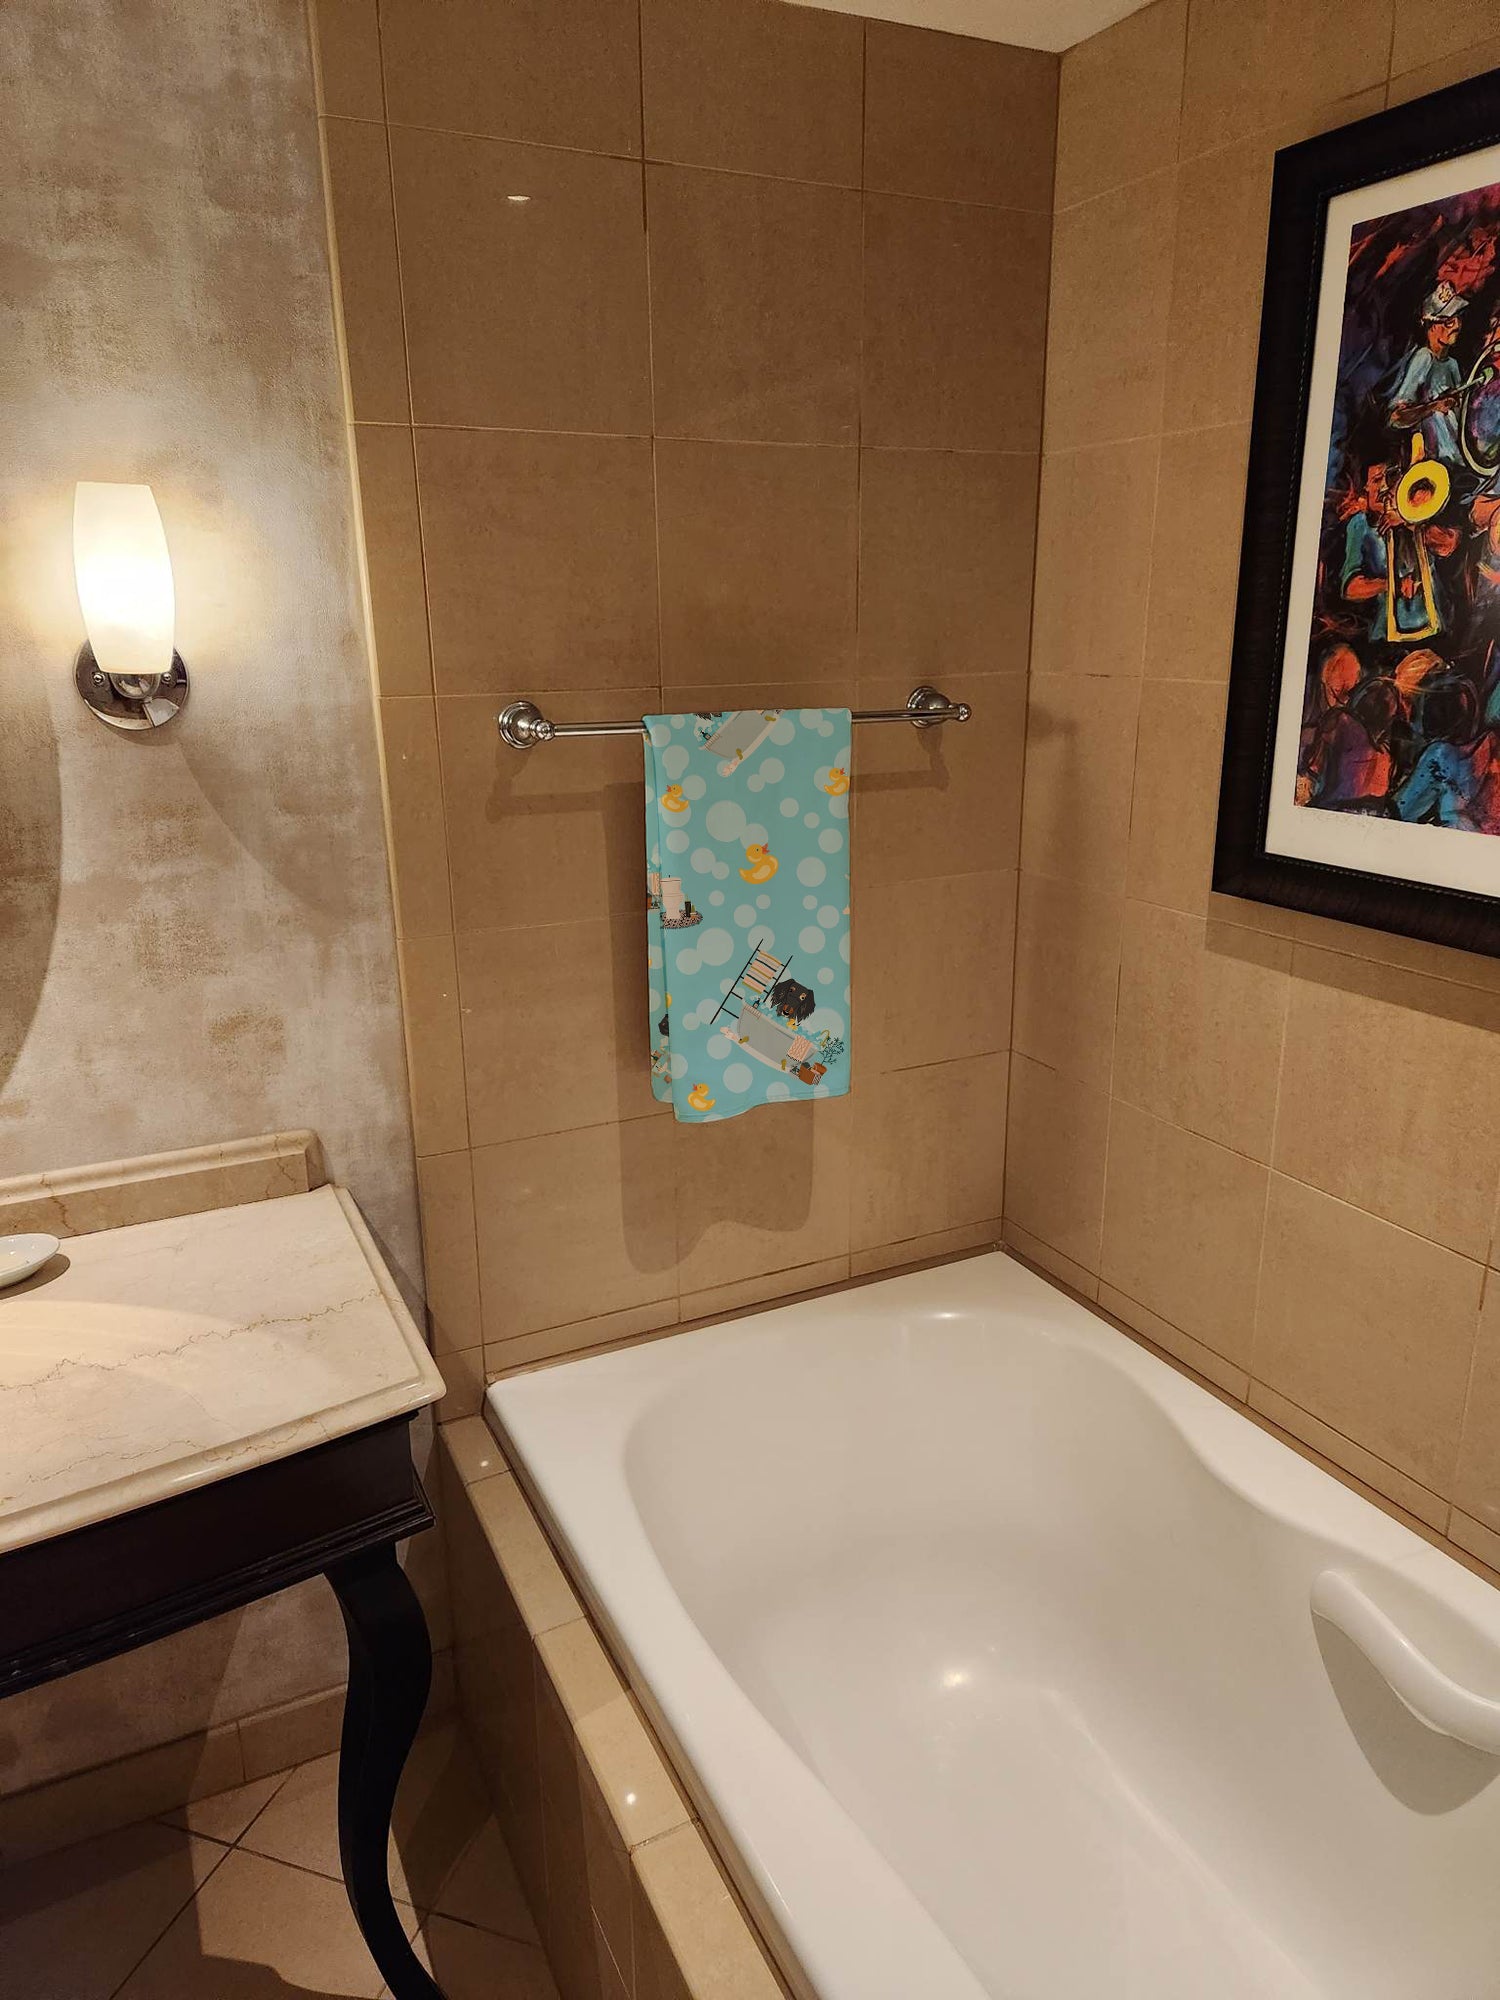 Dapple Wire Haired Dachshund in Bathtub Bath Towel Large